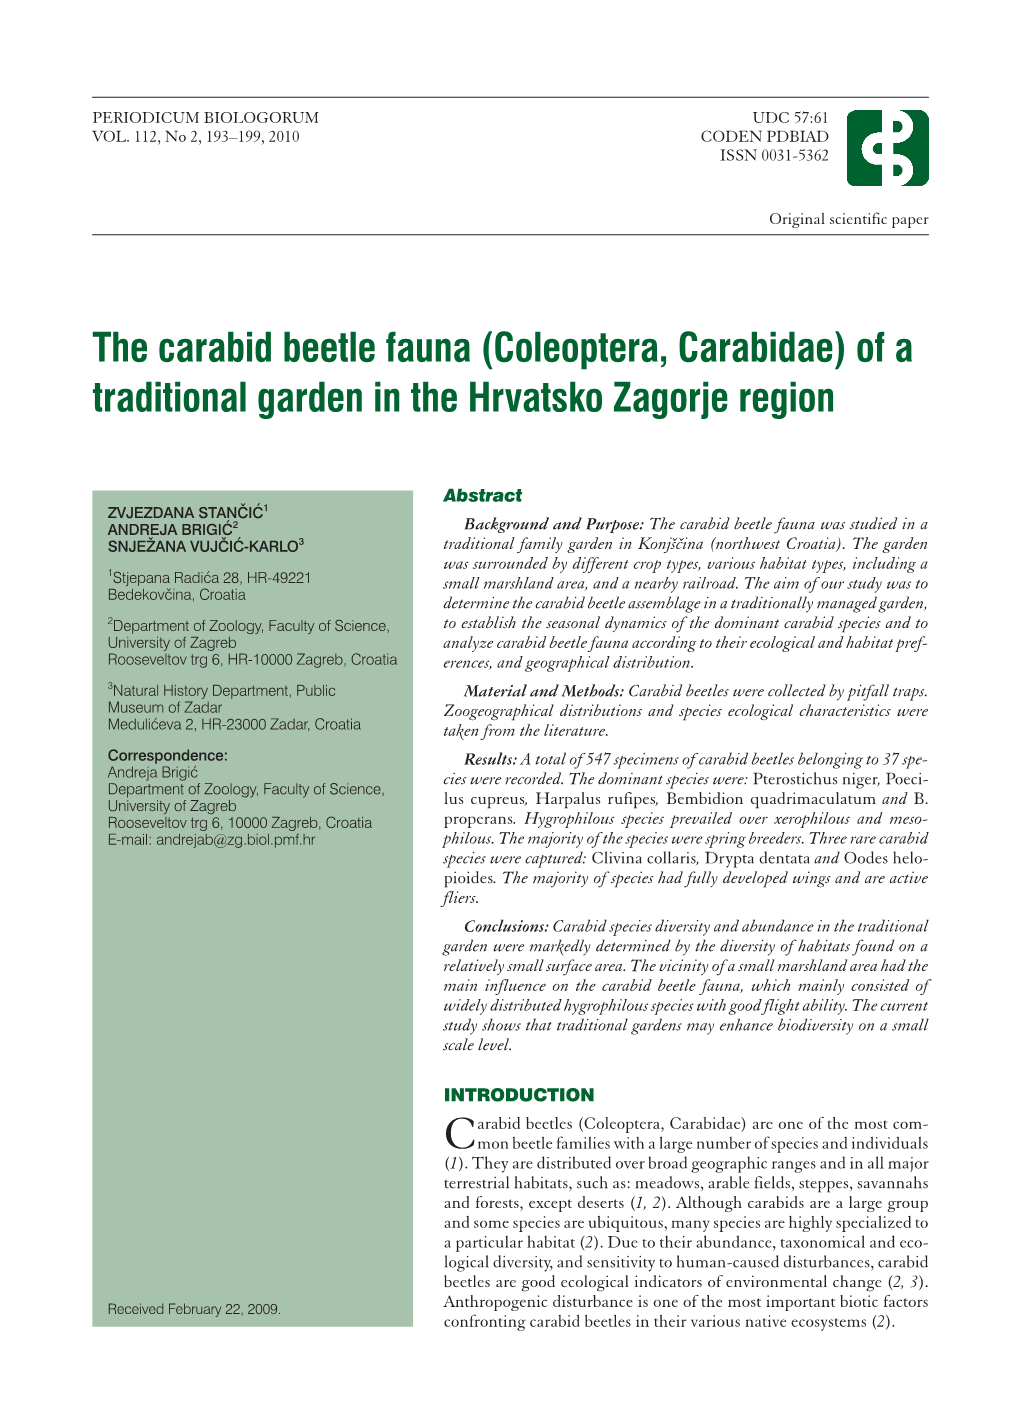 The Carabid Beetle Fauna (Coleoptera, Carabidae) of a Traditional Garden in the Hrvatsko Zagorje Region